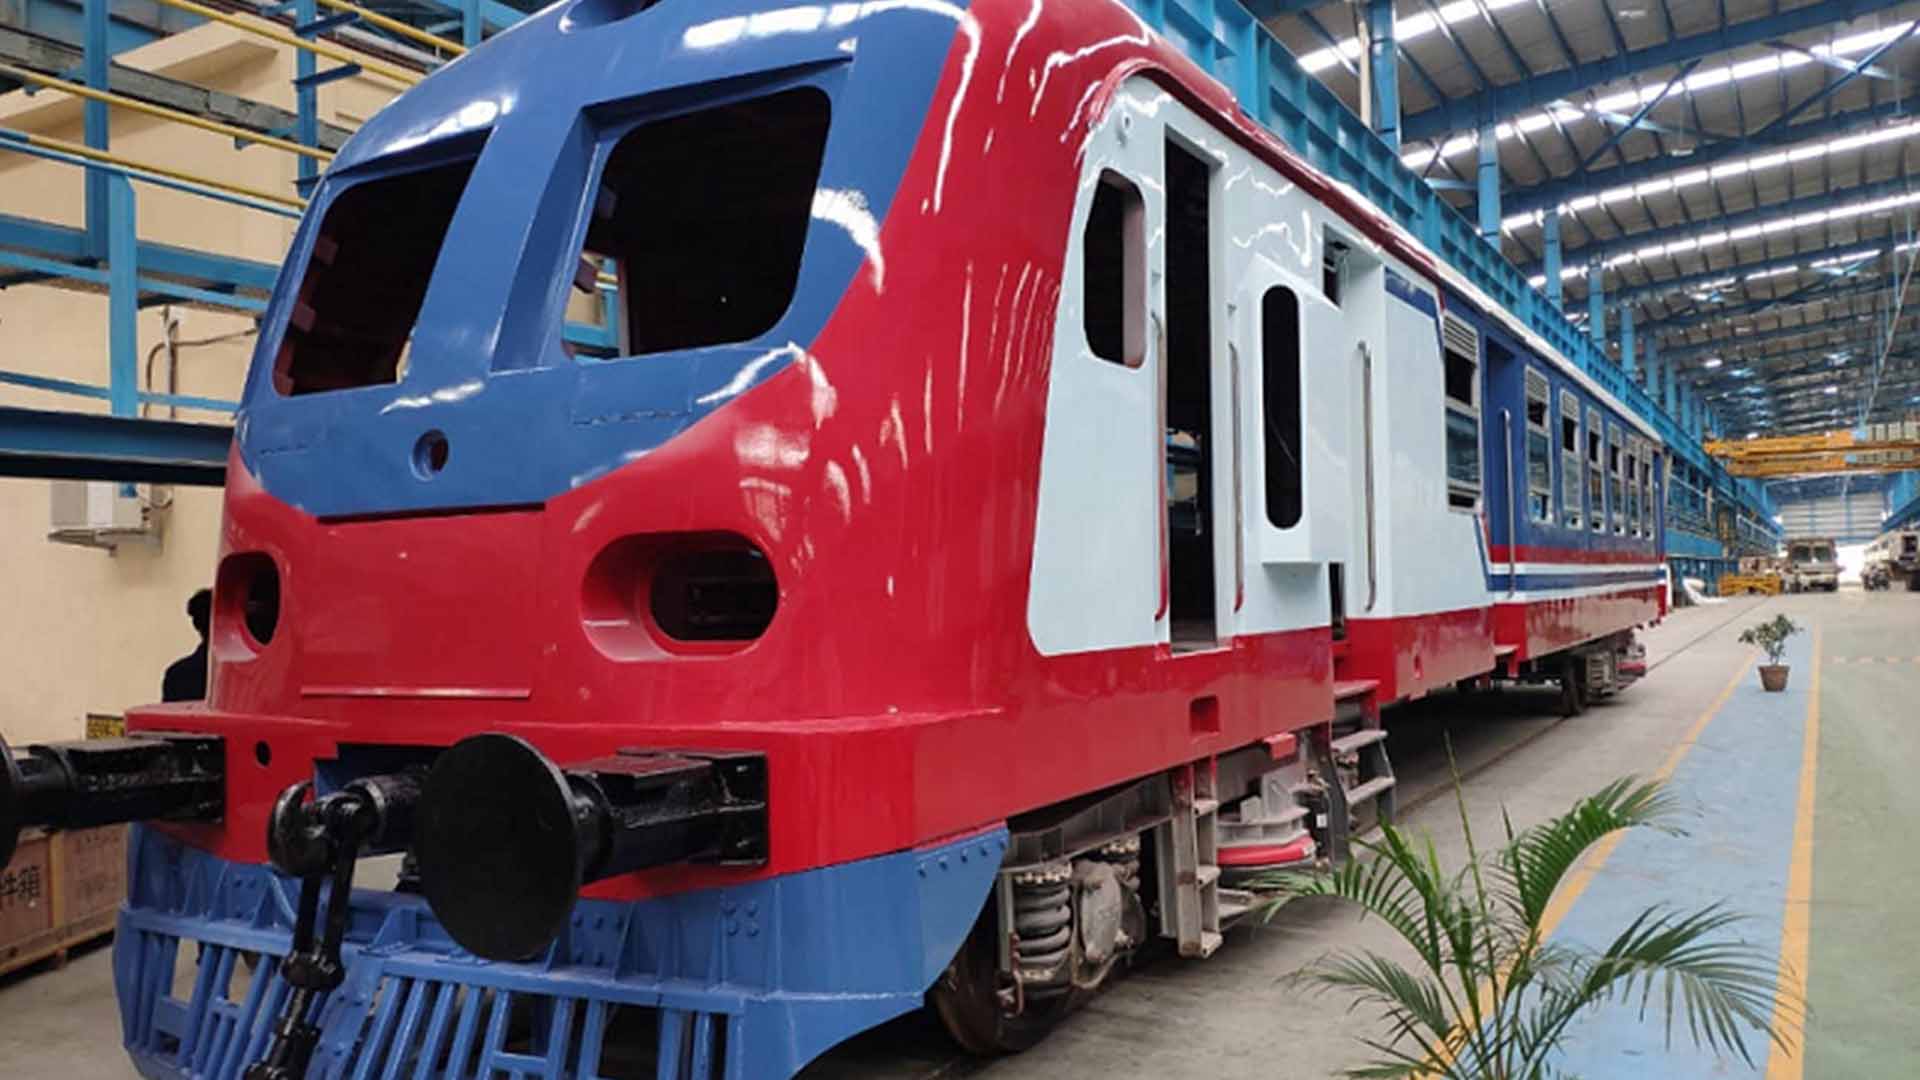 Nepali Trains to arrive within Bhadra